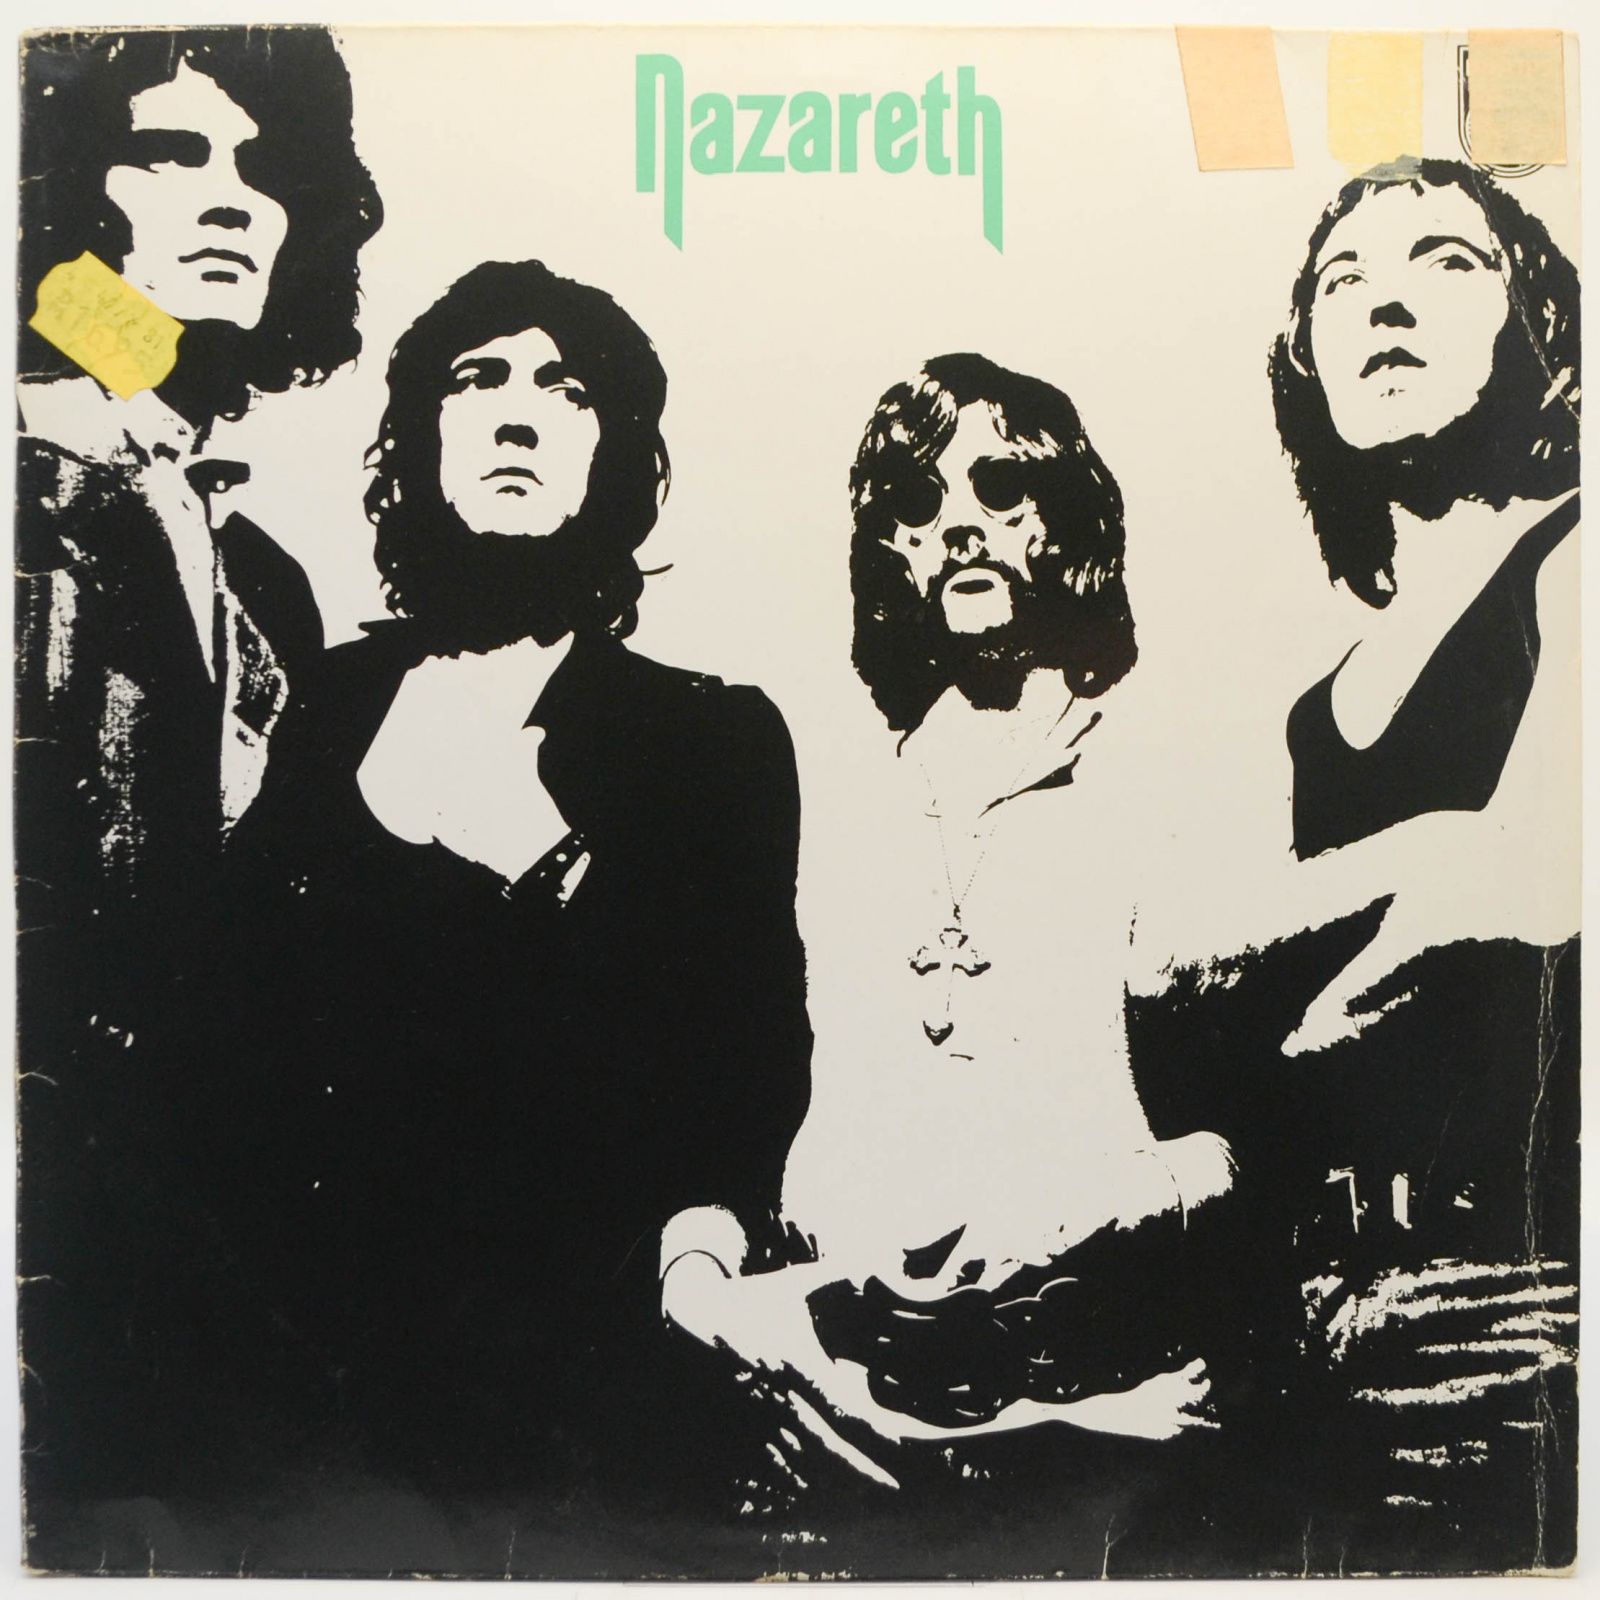 Nazareth — Nazareth, 1971